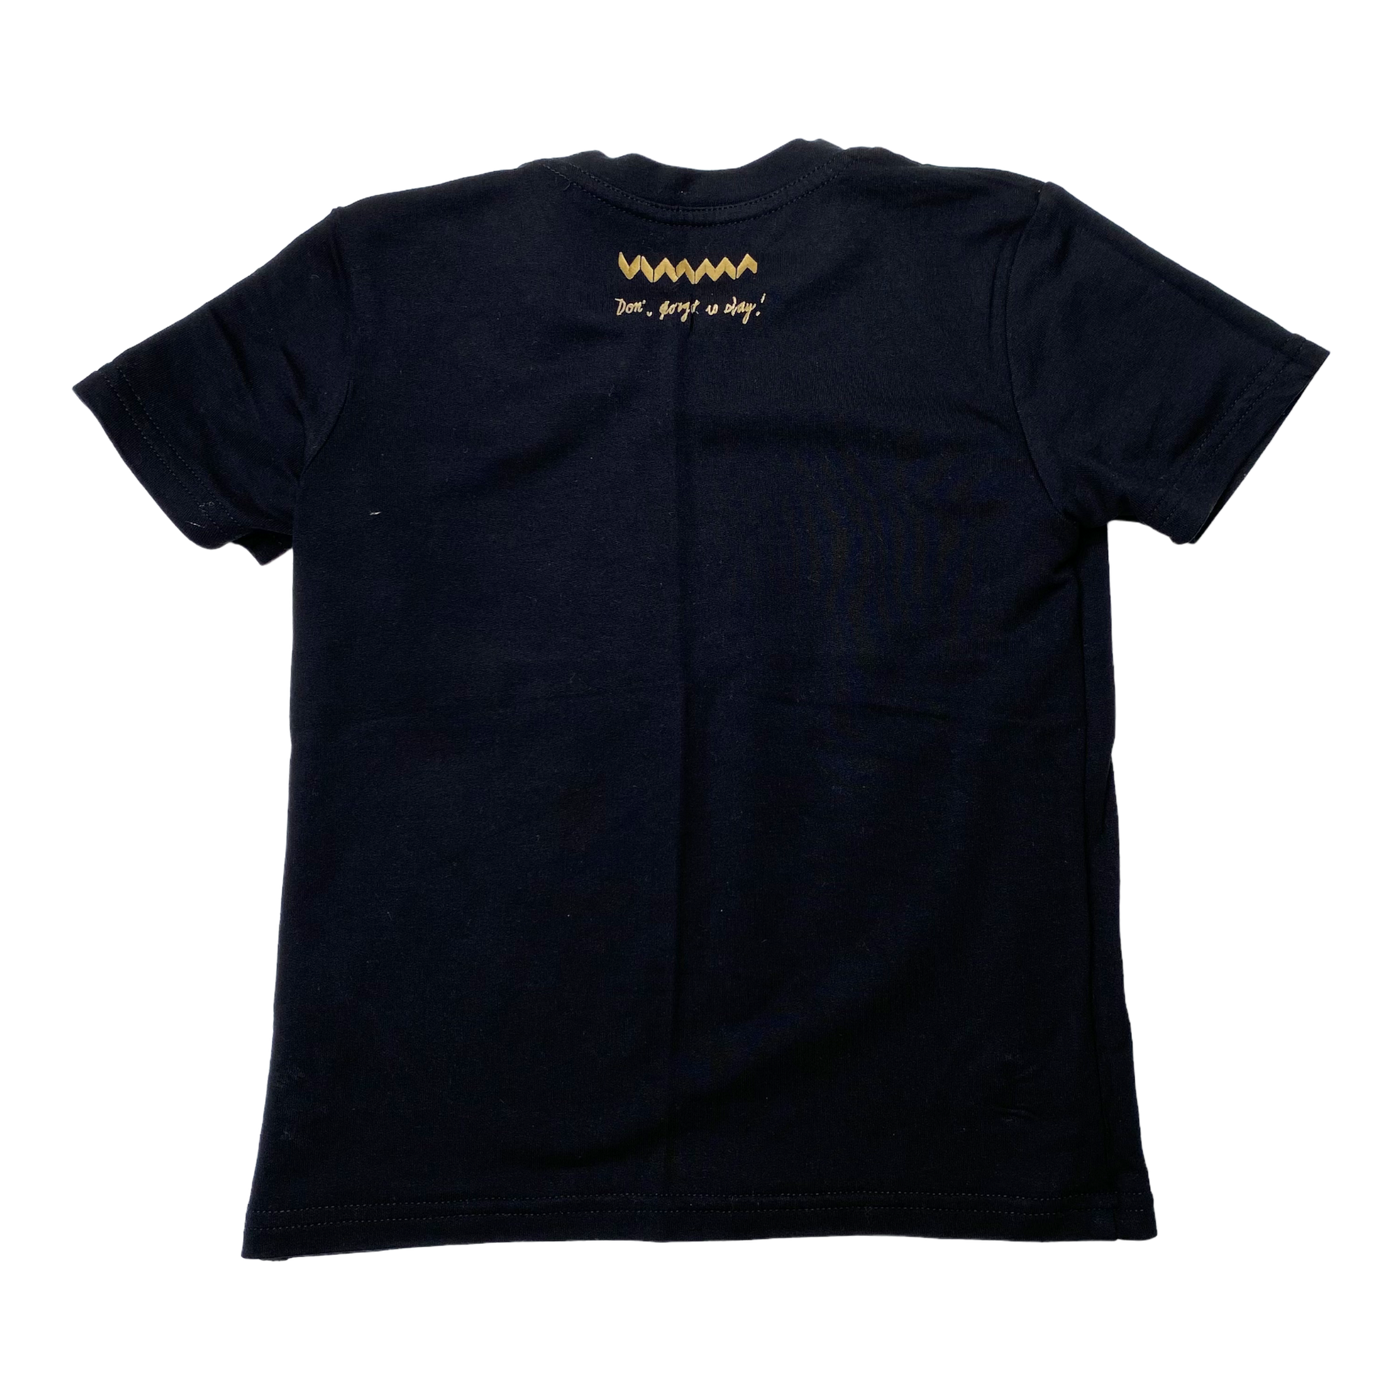 Vimma shirt, black | 110cm